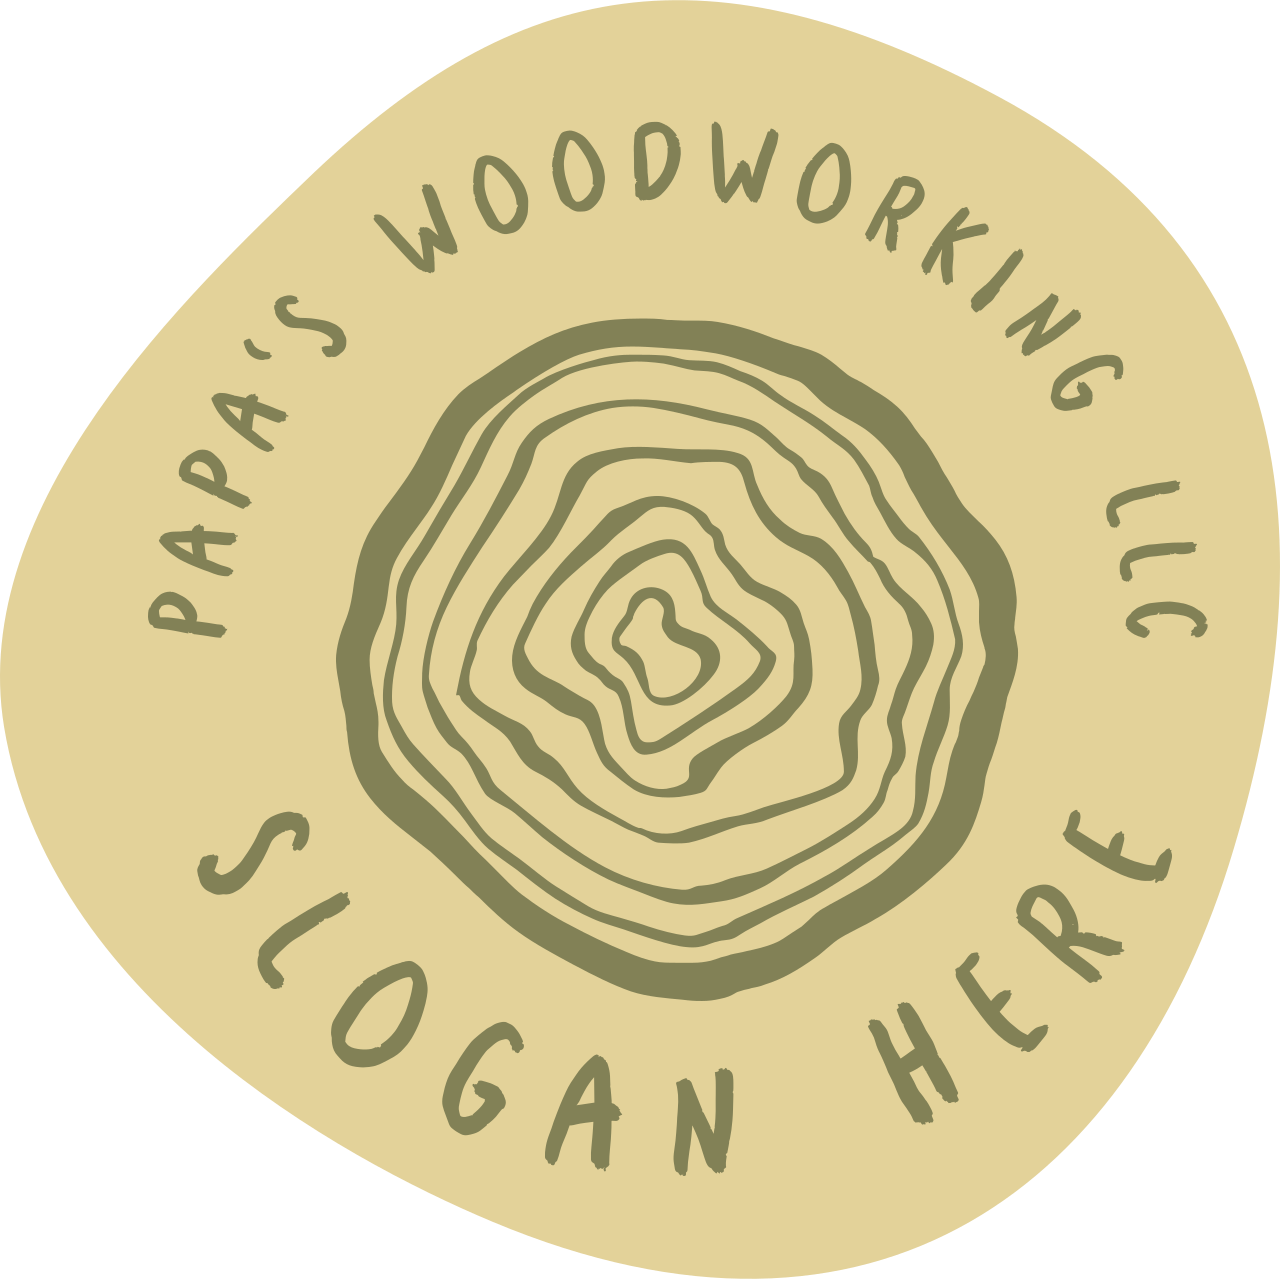 PAPA'S WOODWORKING LLC's logo